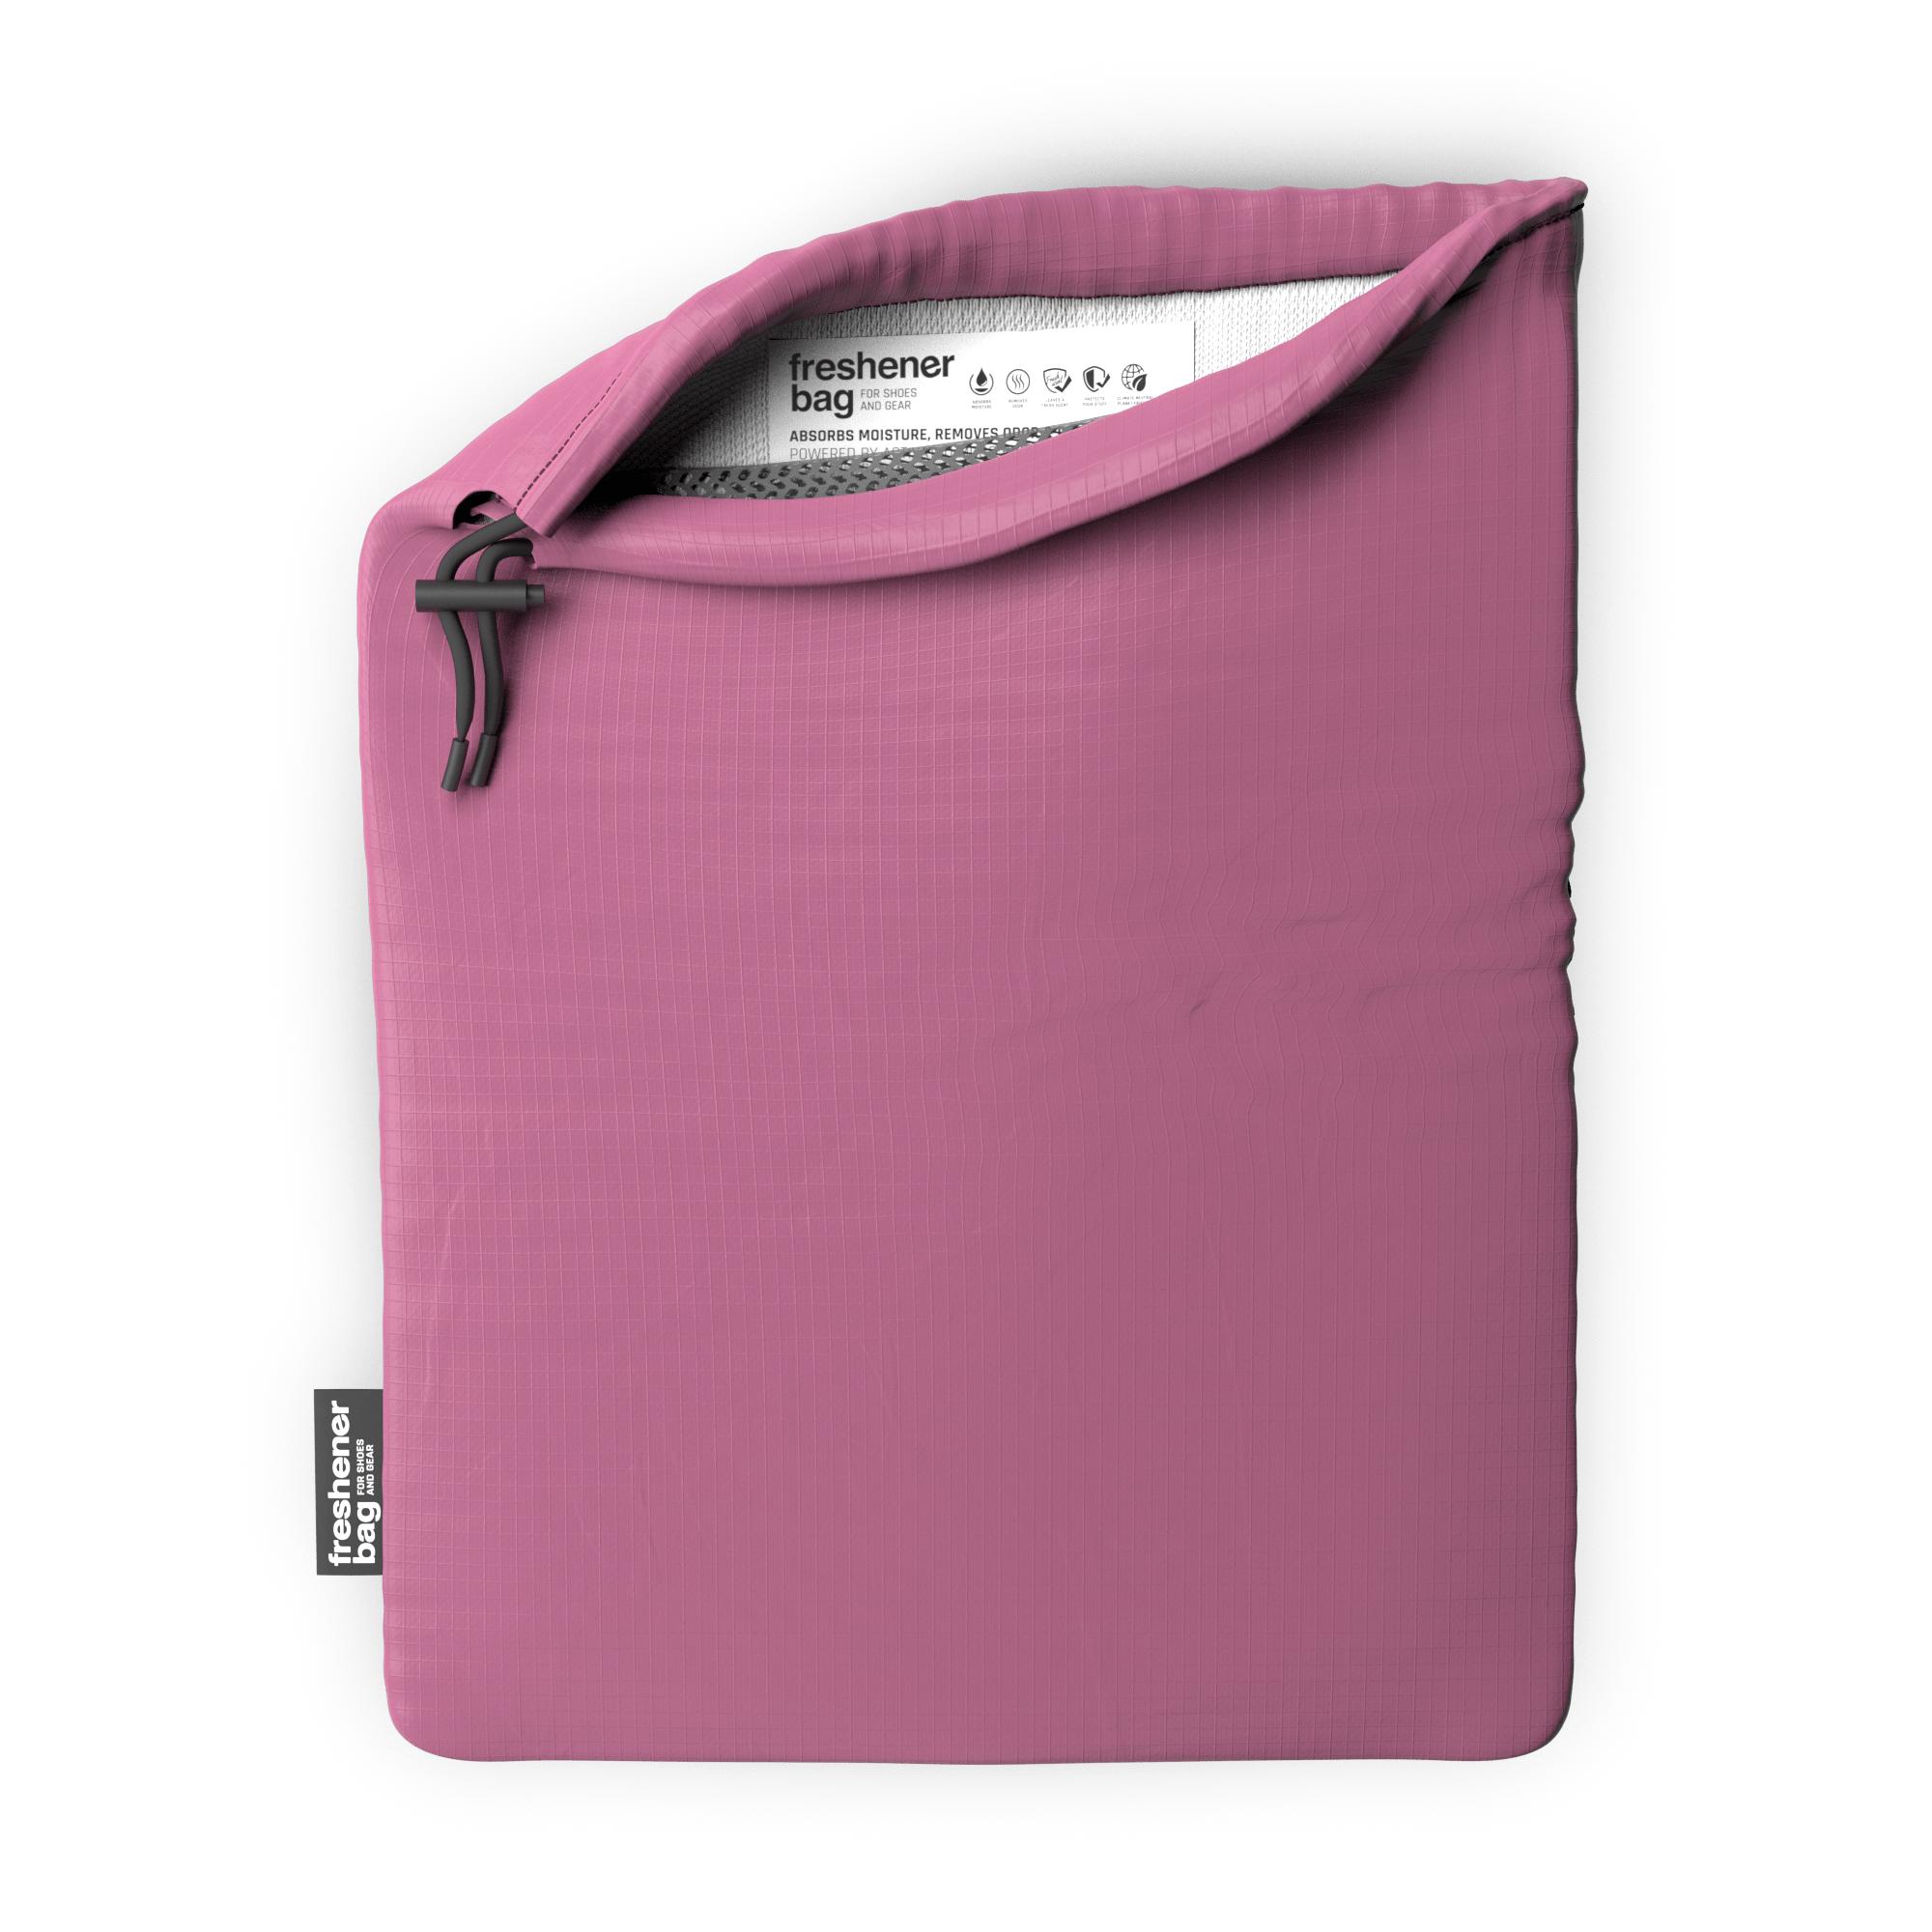 Freshener Bag - Pink